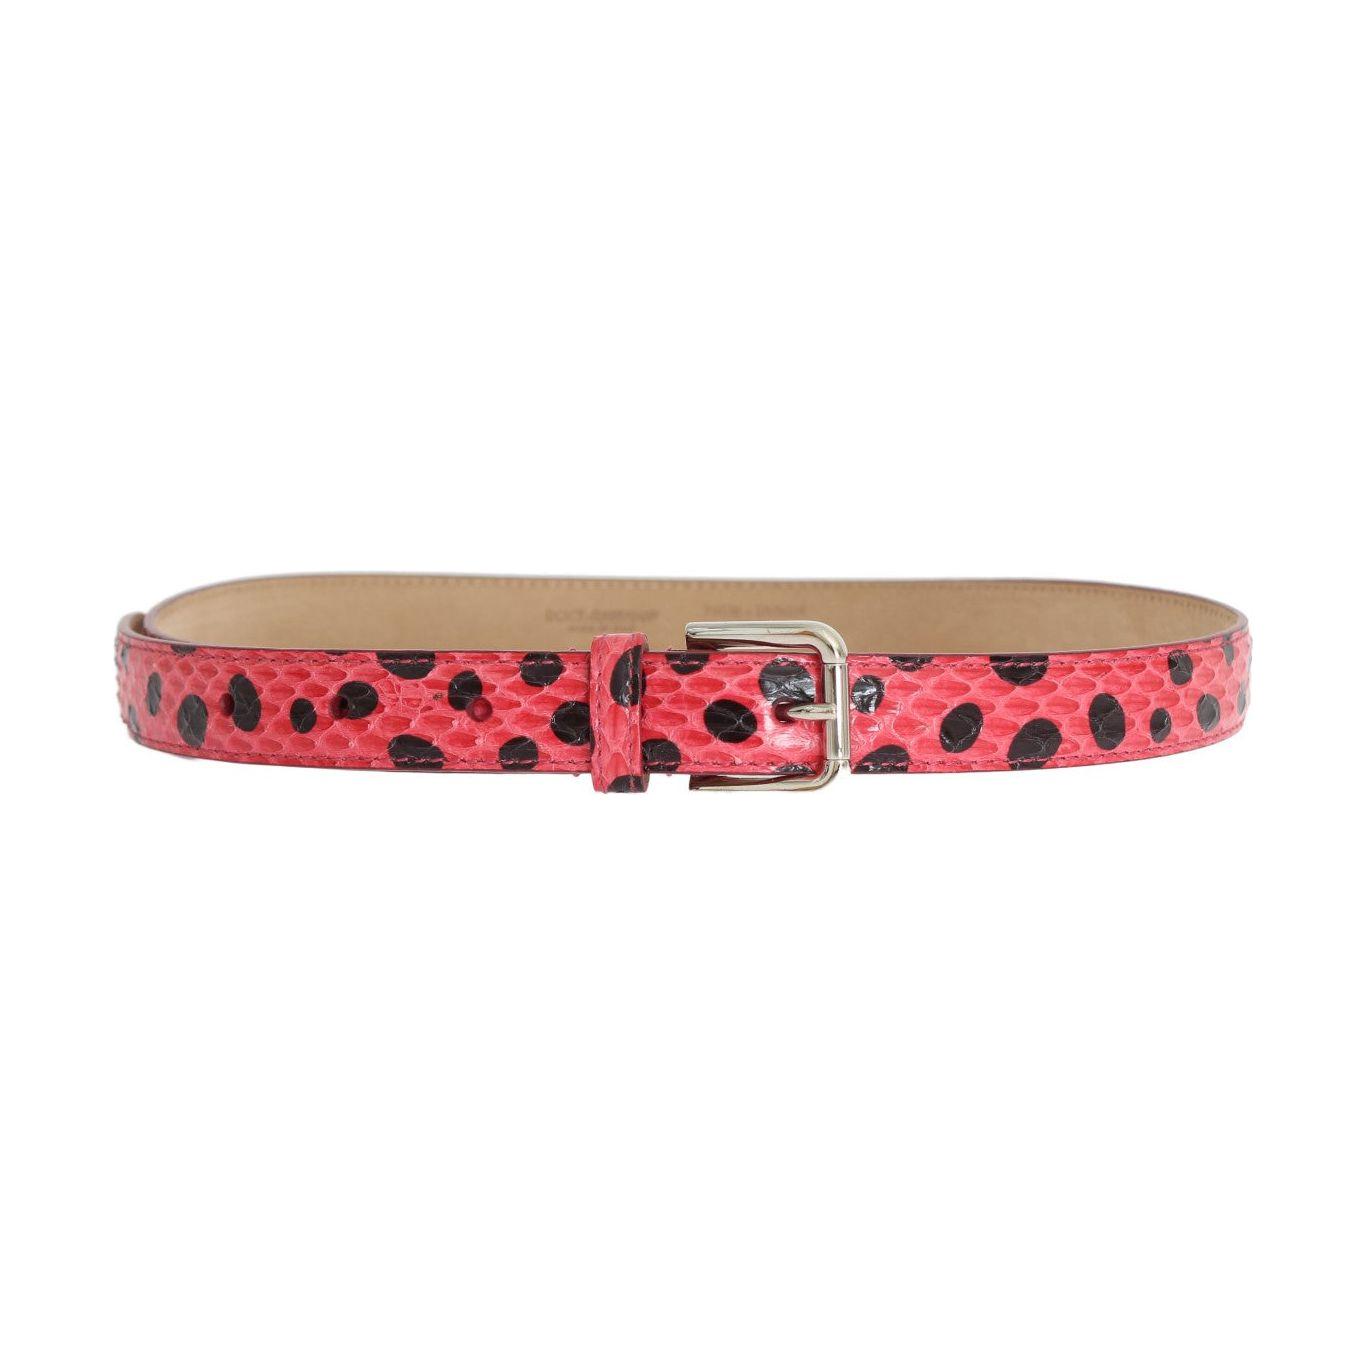 Dolce & Gabbana Polka Dot Snakeskin Belt with Silver Buckle pink-polka-snakeskin-silver-buckle-belt Belt 472628-pink-polka-snakeskin-silver-buckle-belt-2.jpg